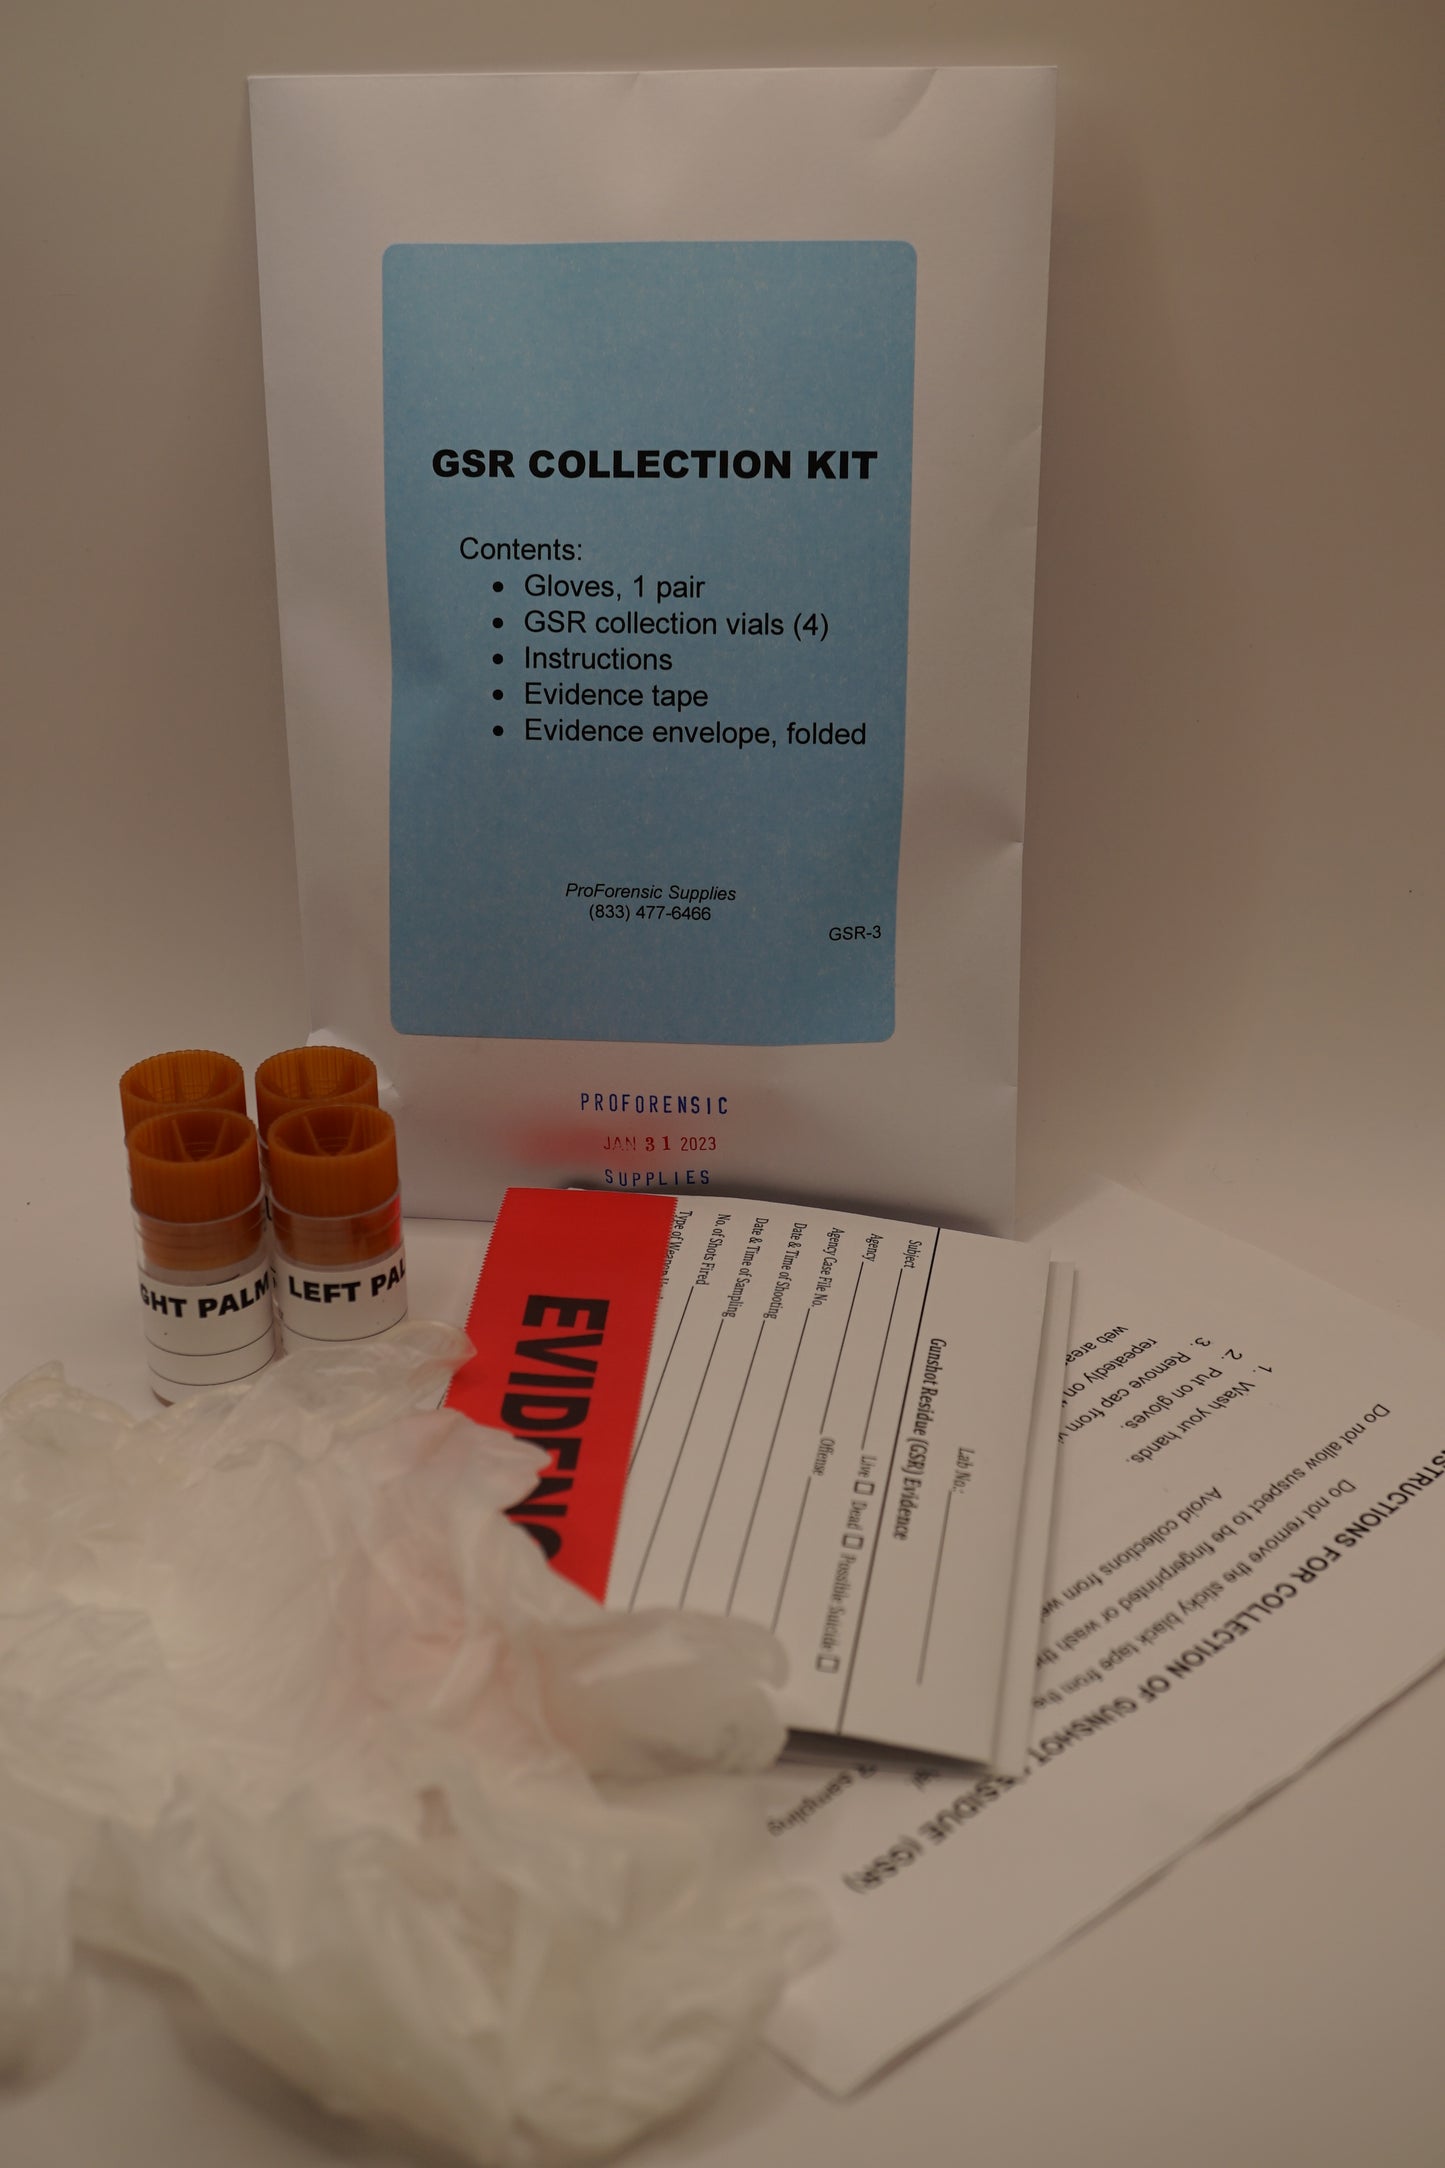 GSR (Gunshot Residue) Kit